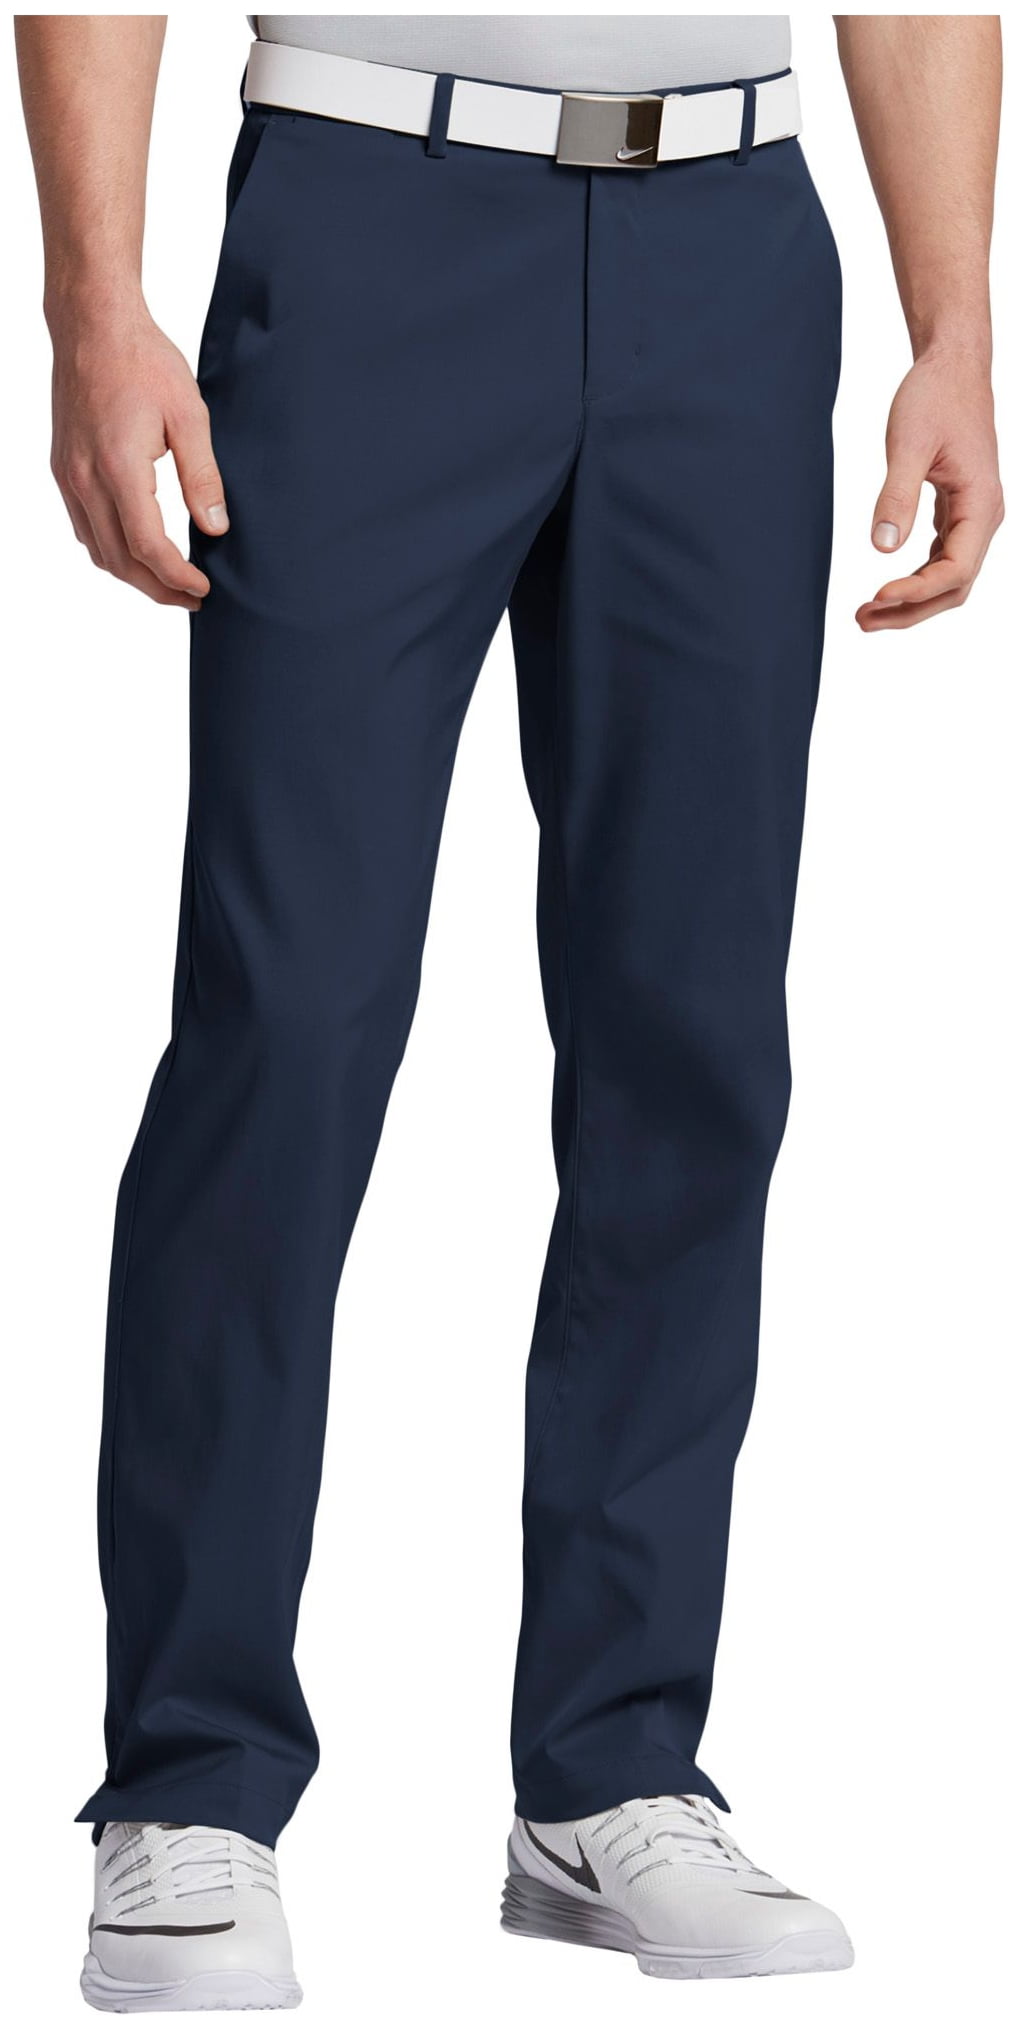 Nike Men's Flat Front Golf Pants (Midnight Navy, 36) - Walmart.com ...